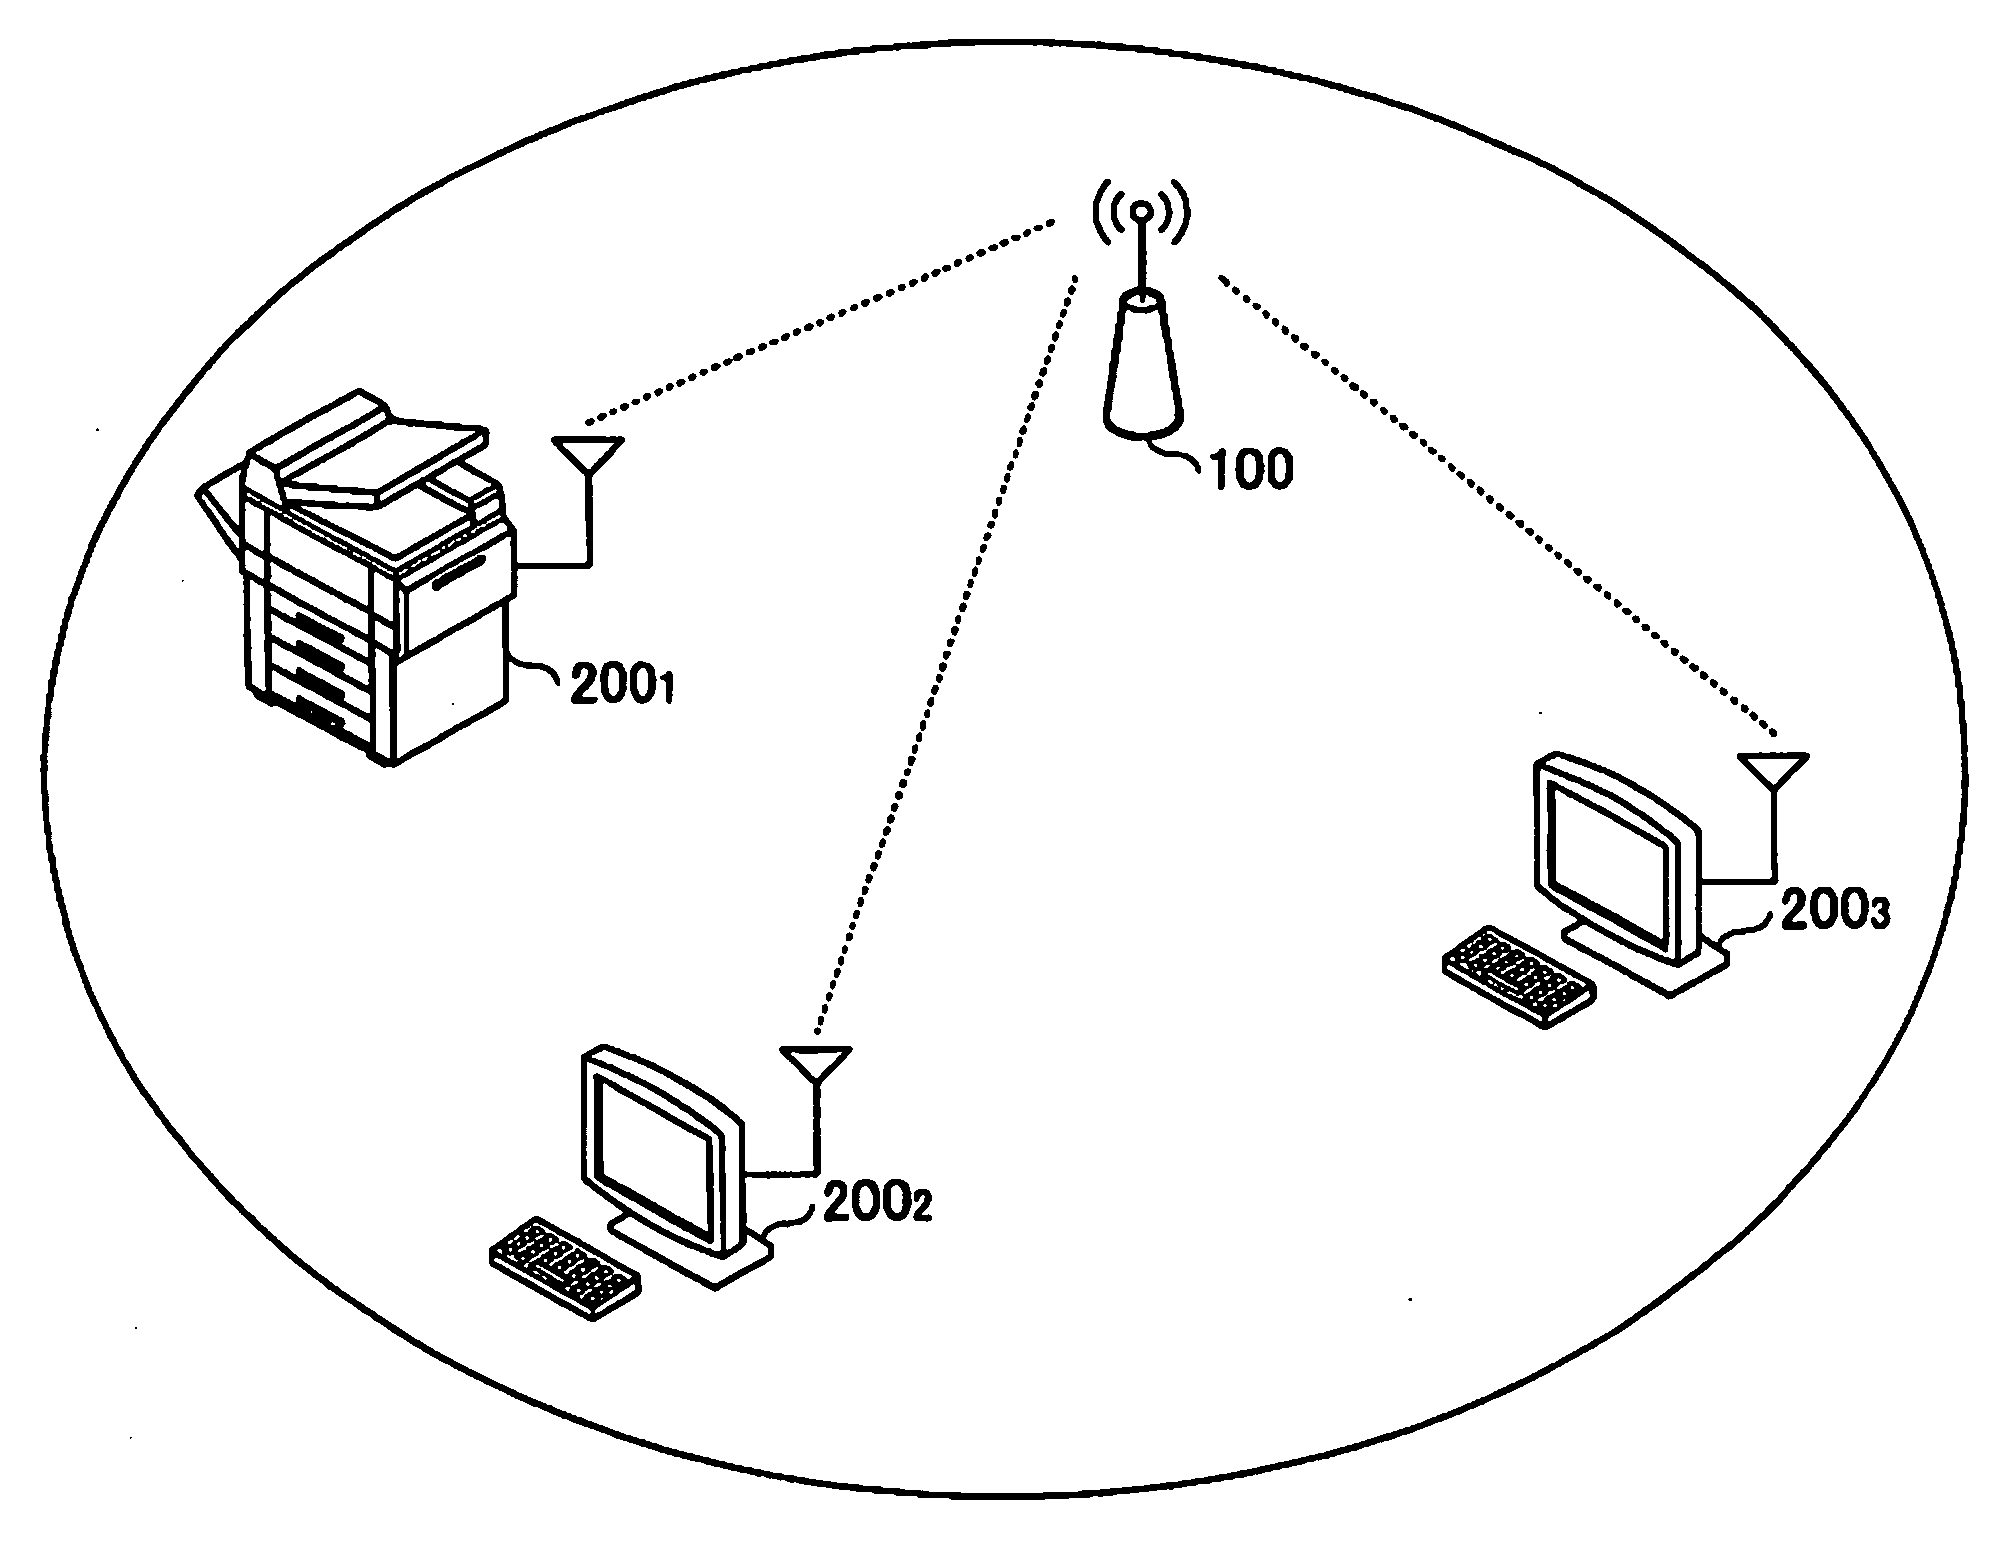 Radio communications apparatus and method